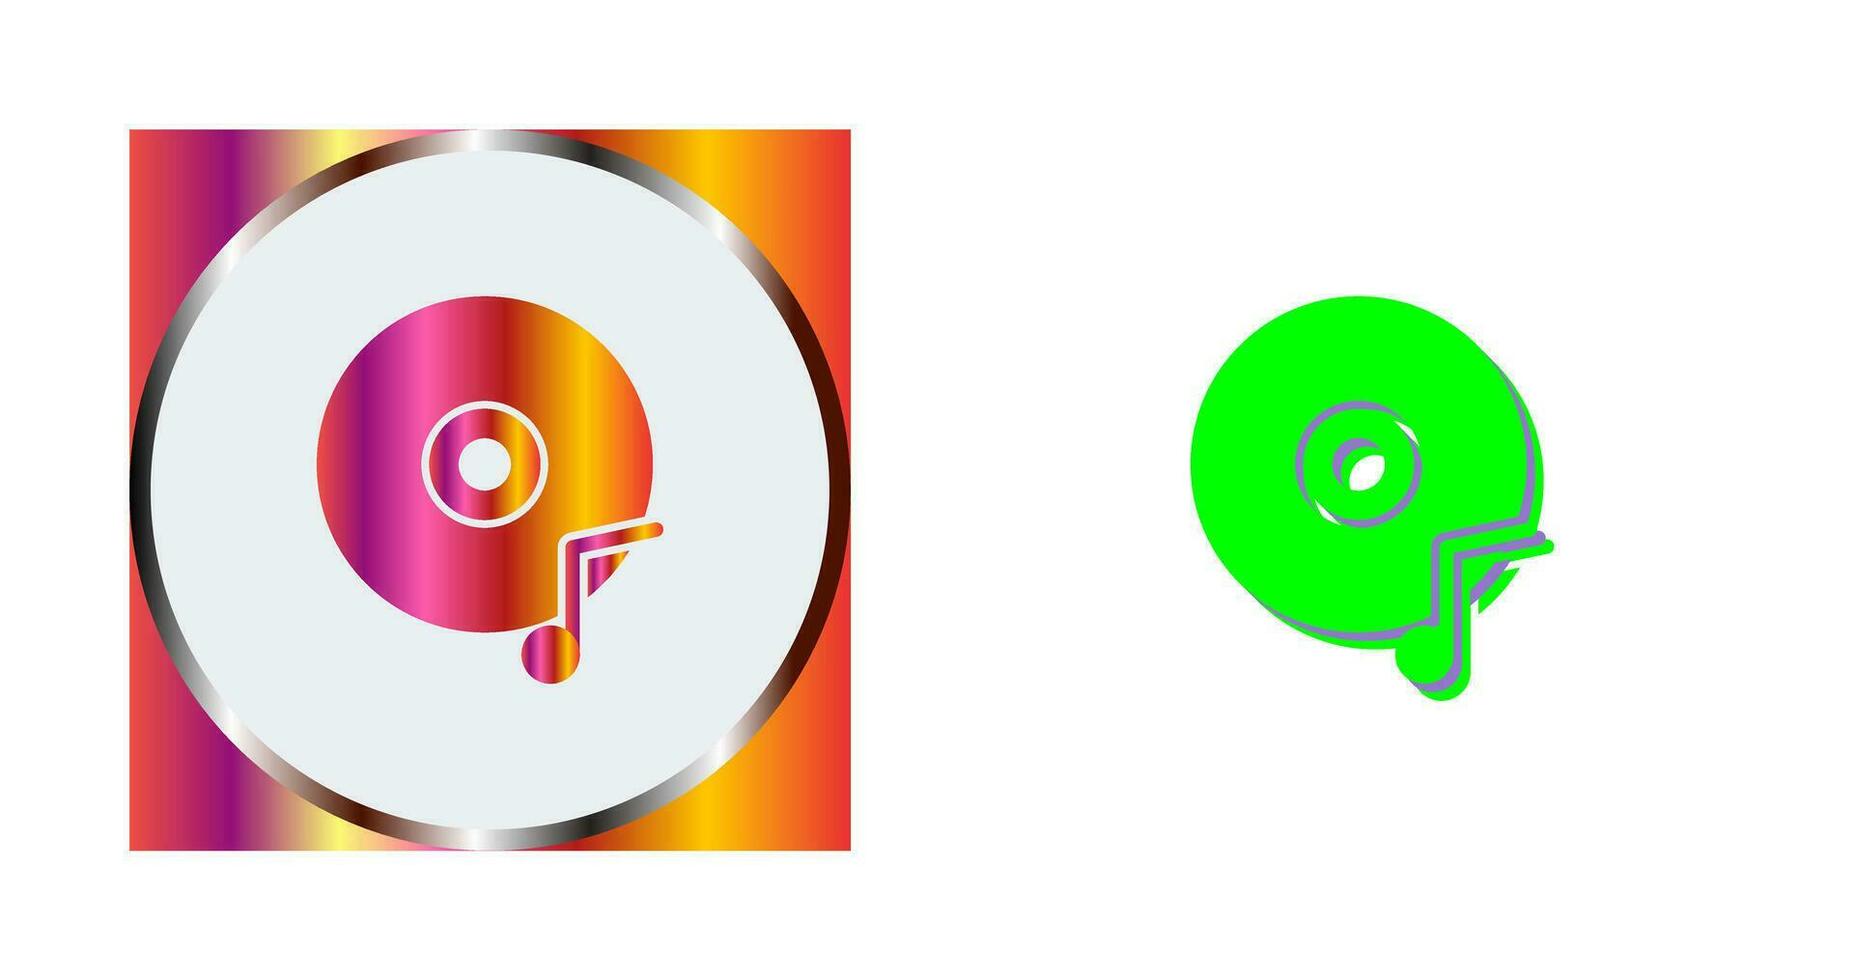 icono de vector de cd de música